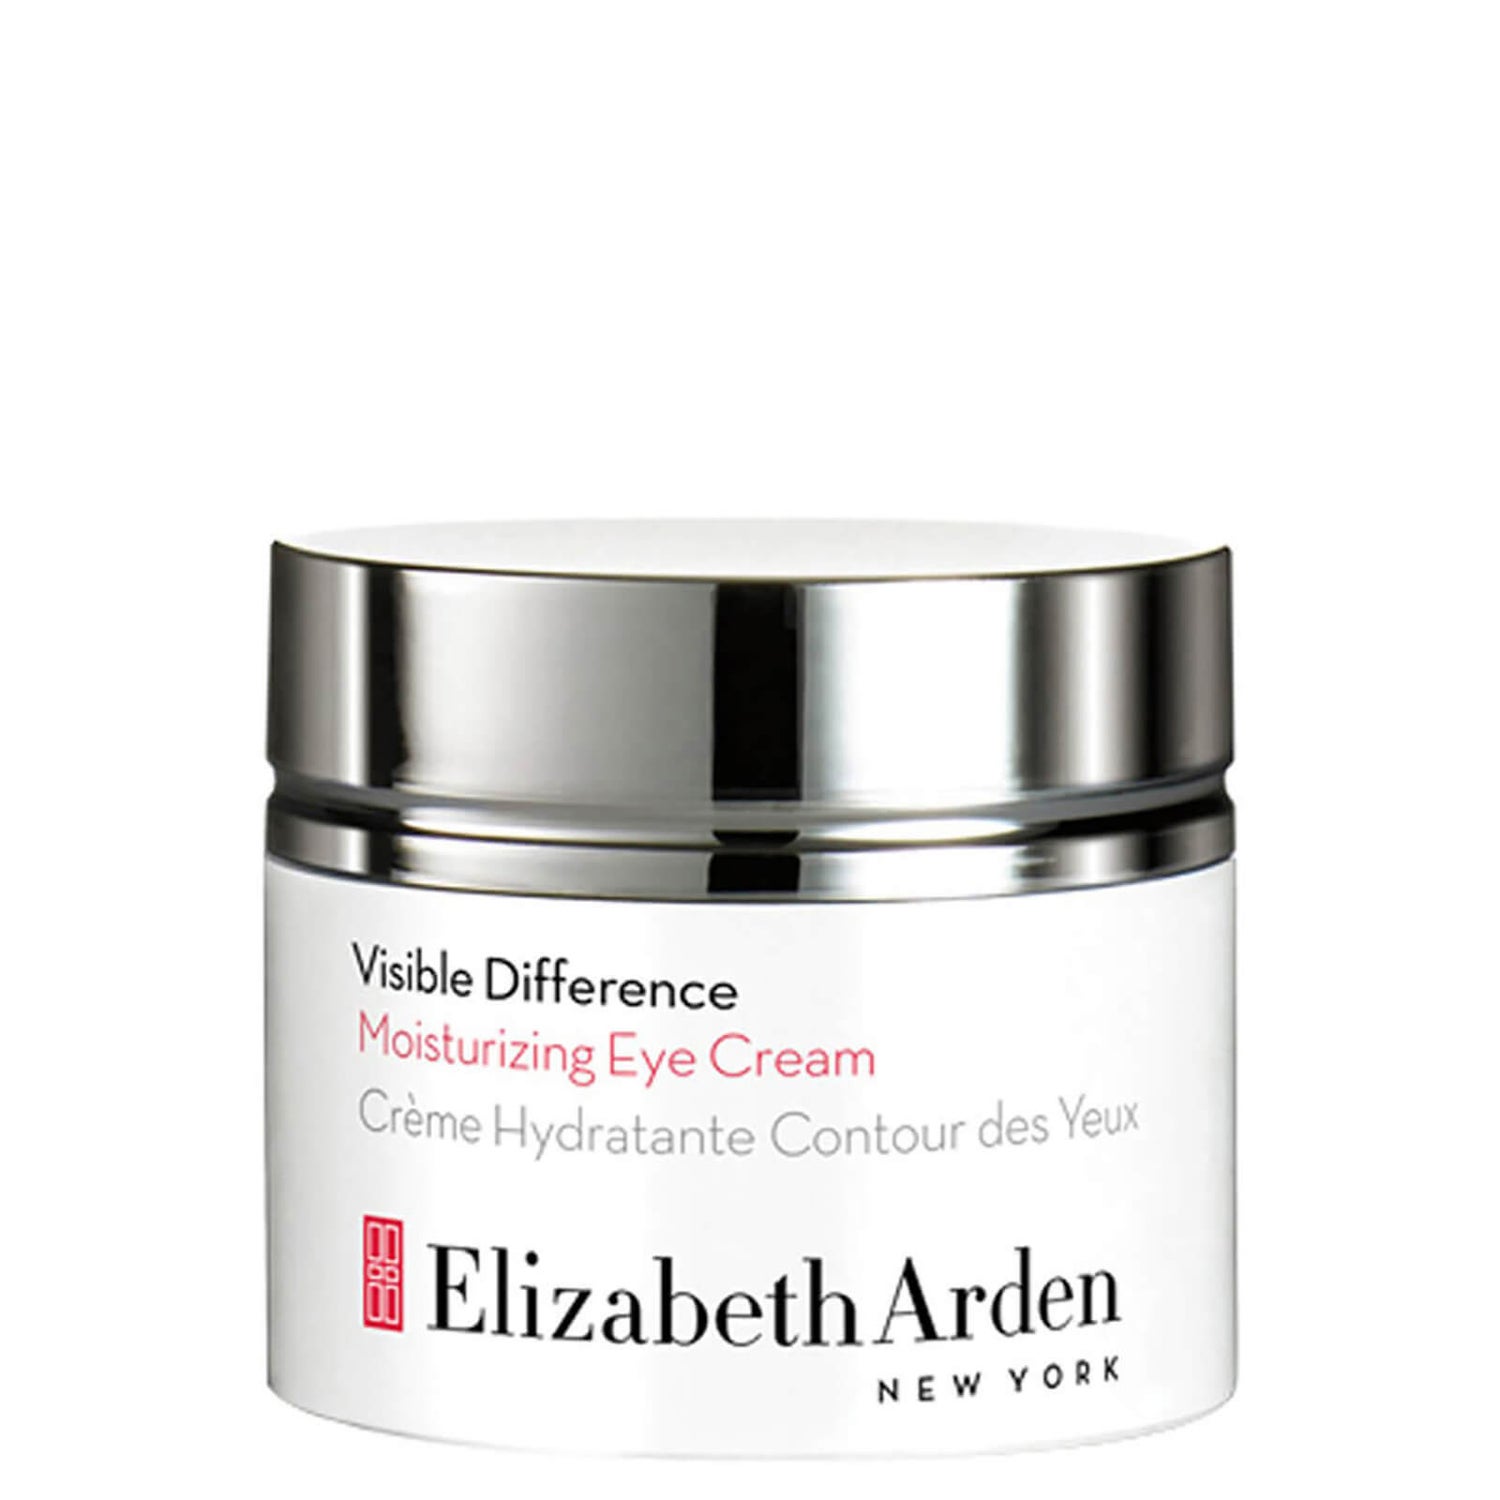 Elizabeth Arden Visible Difference Moisturizing Eye Cream (0.5 oz.)